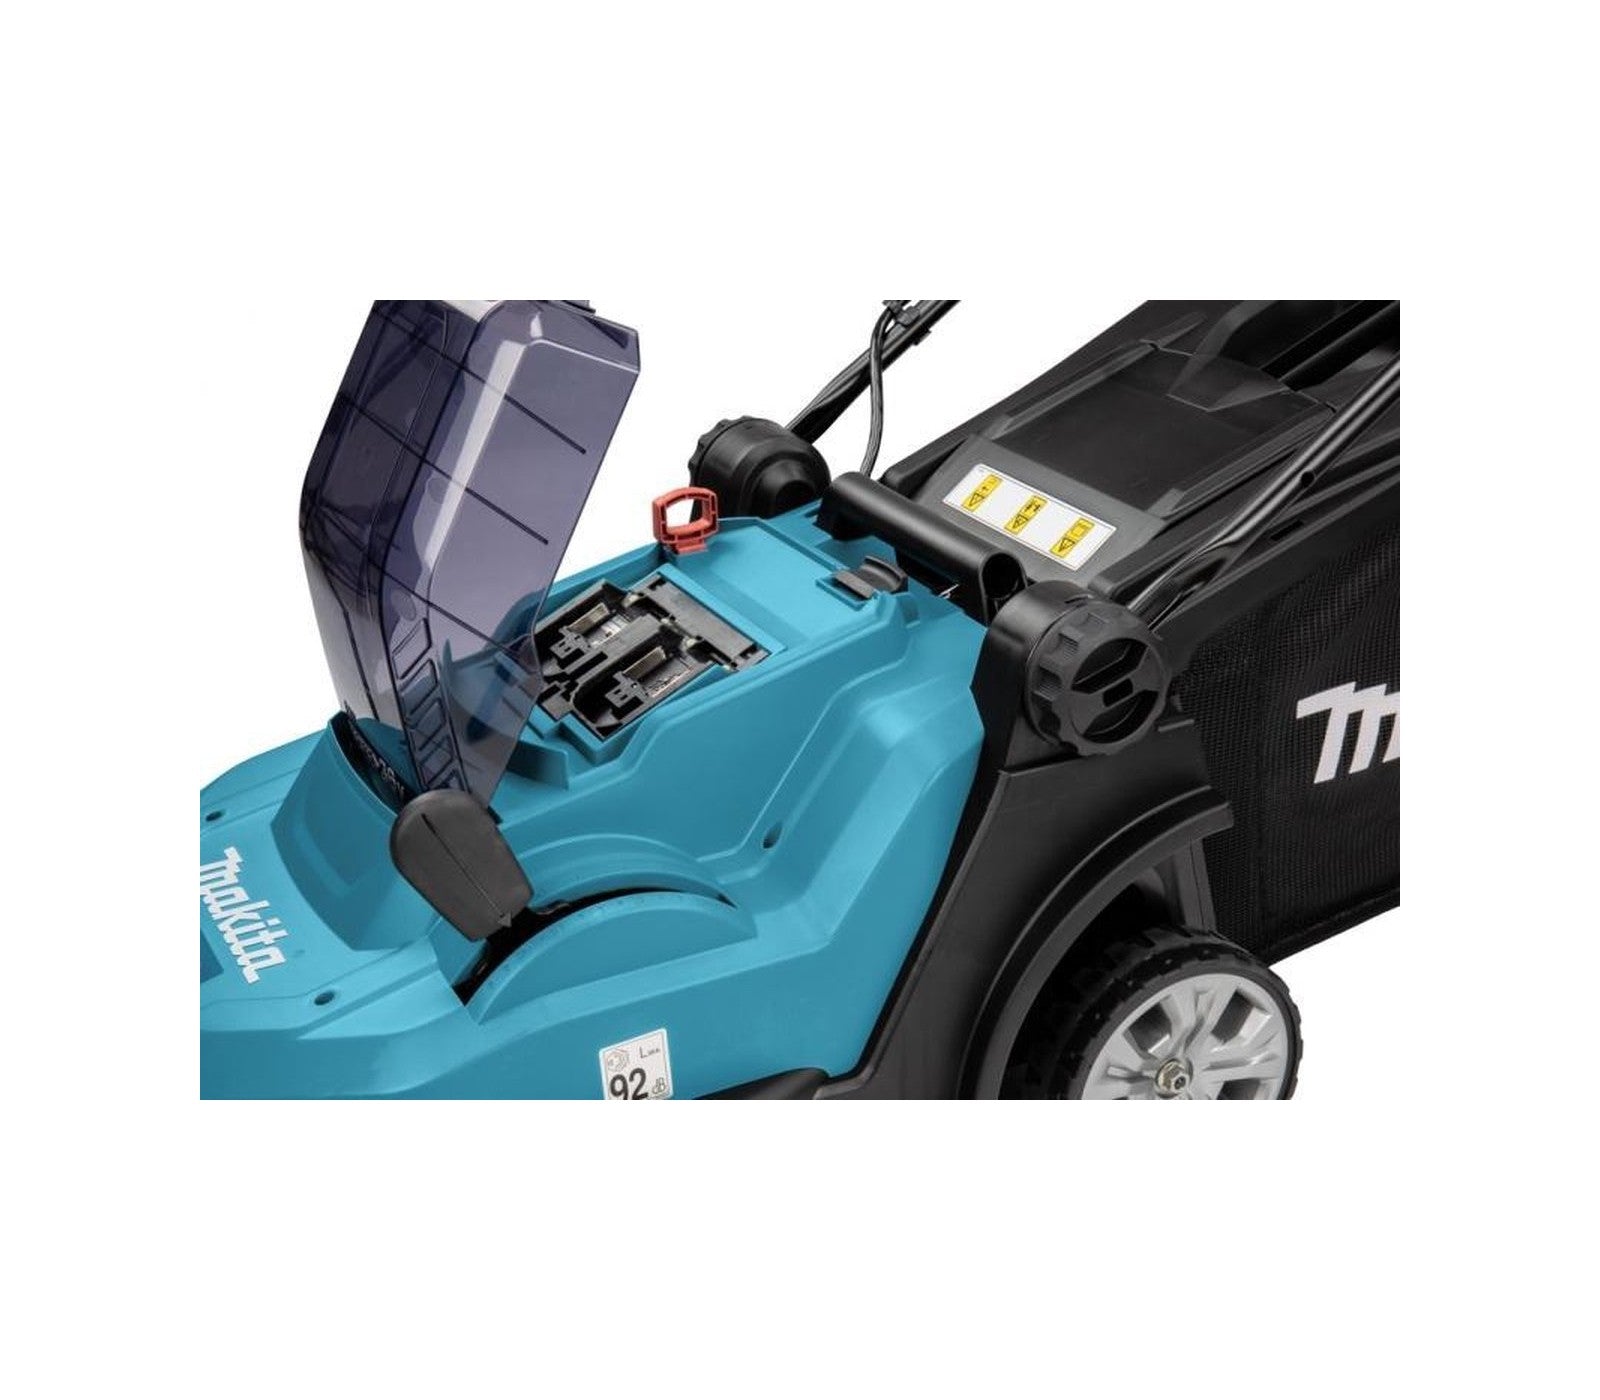 Makita 18Vx2 (36v) Cordless Lawn Mower DLM432 Solo Power Tool Services